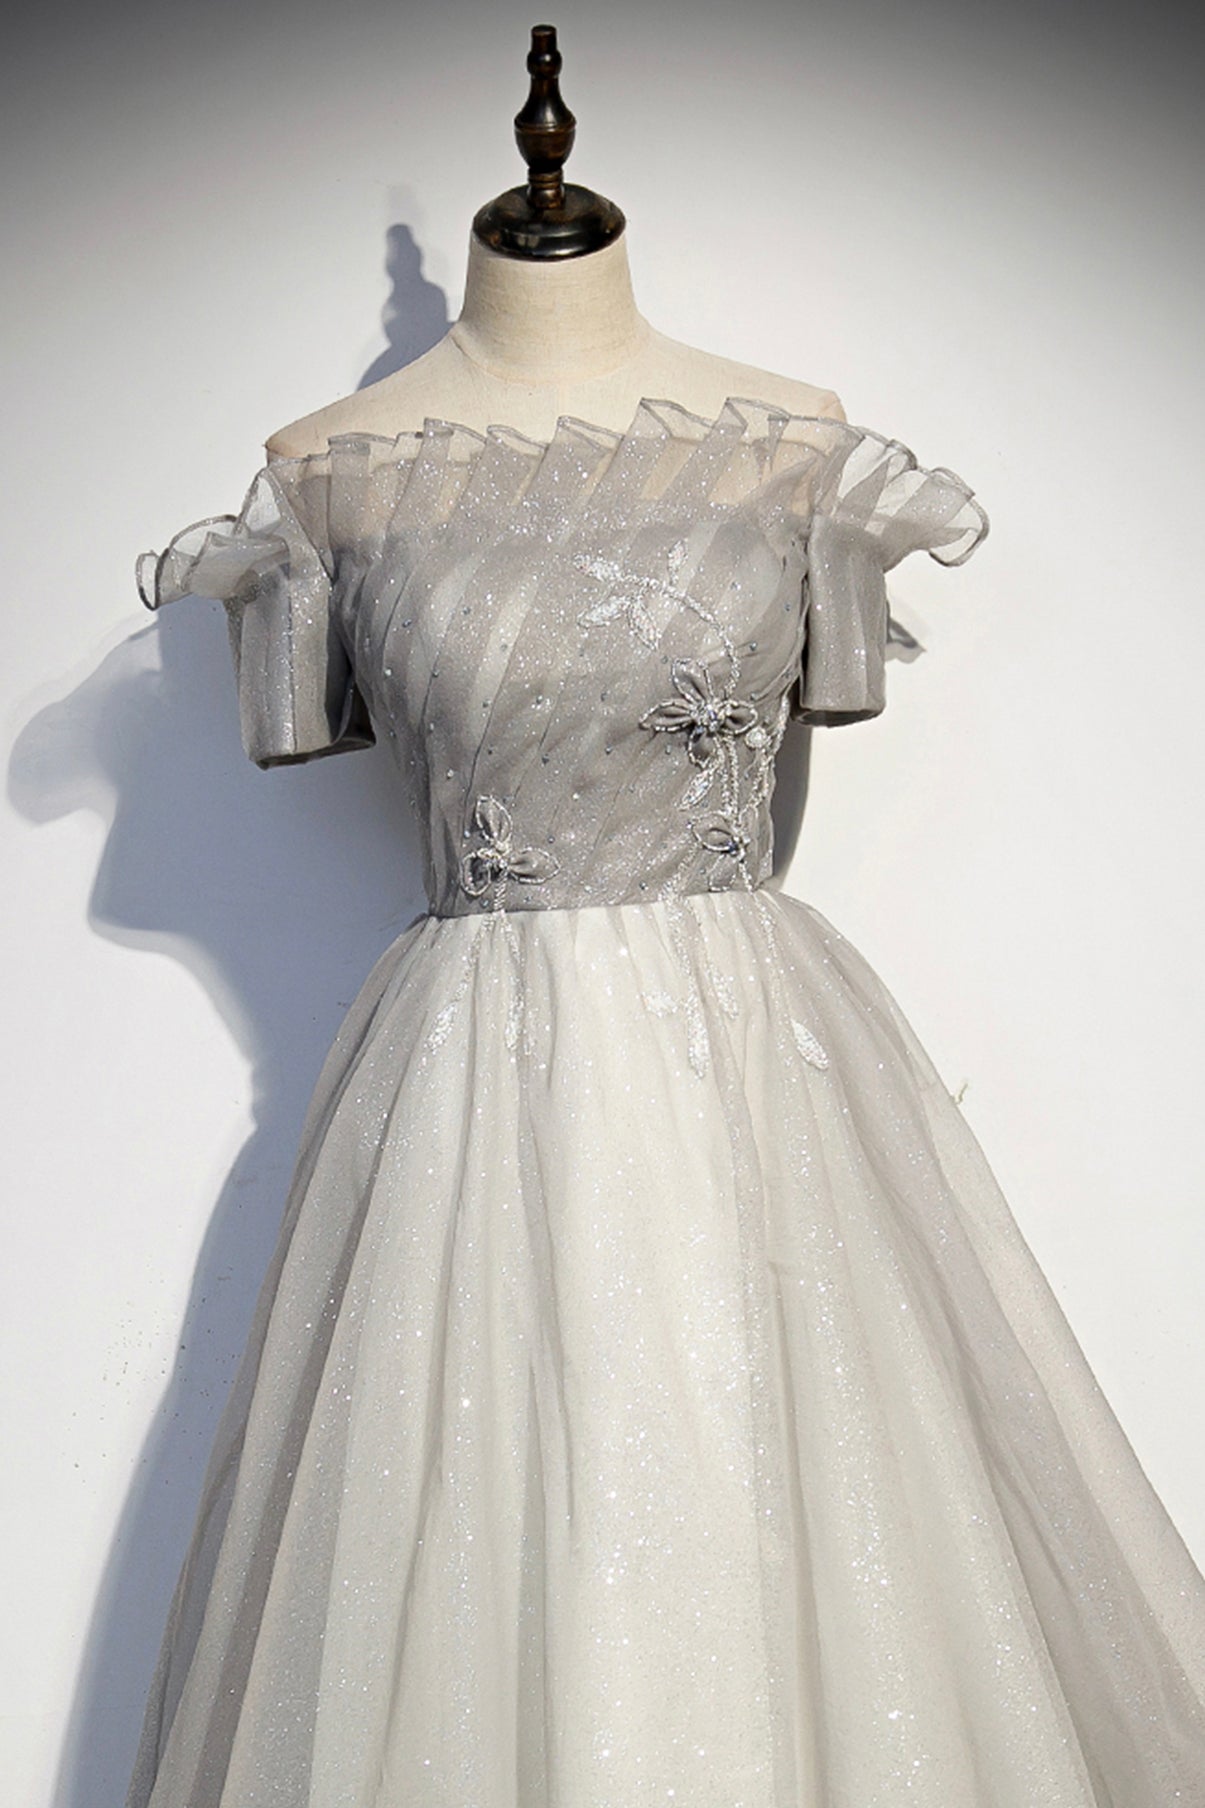 Langes Ballkleid aus silbernem Tüll, formelles Kleid 8598